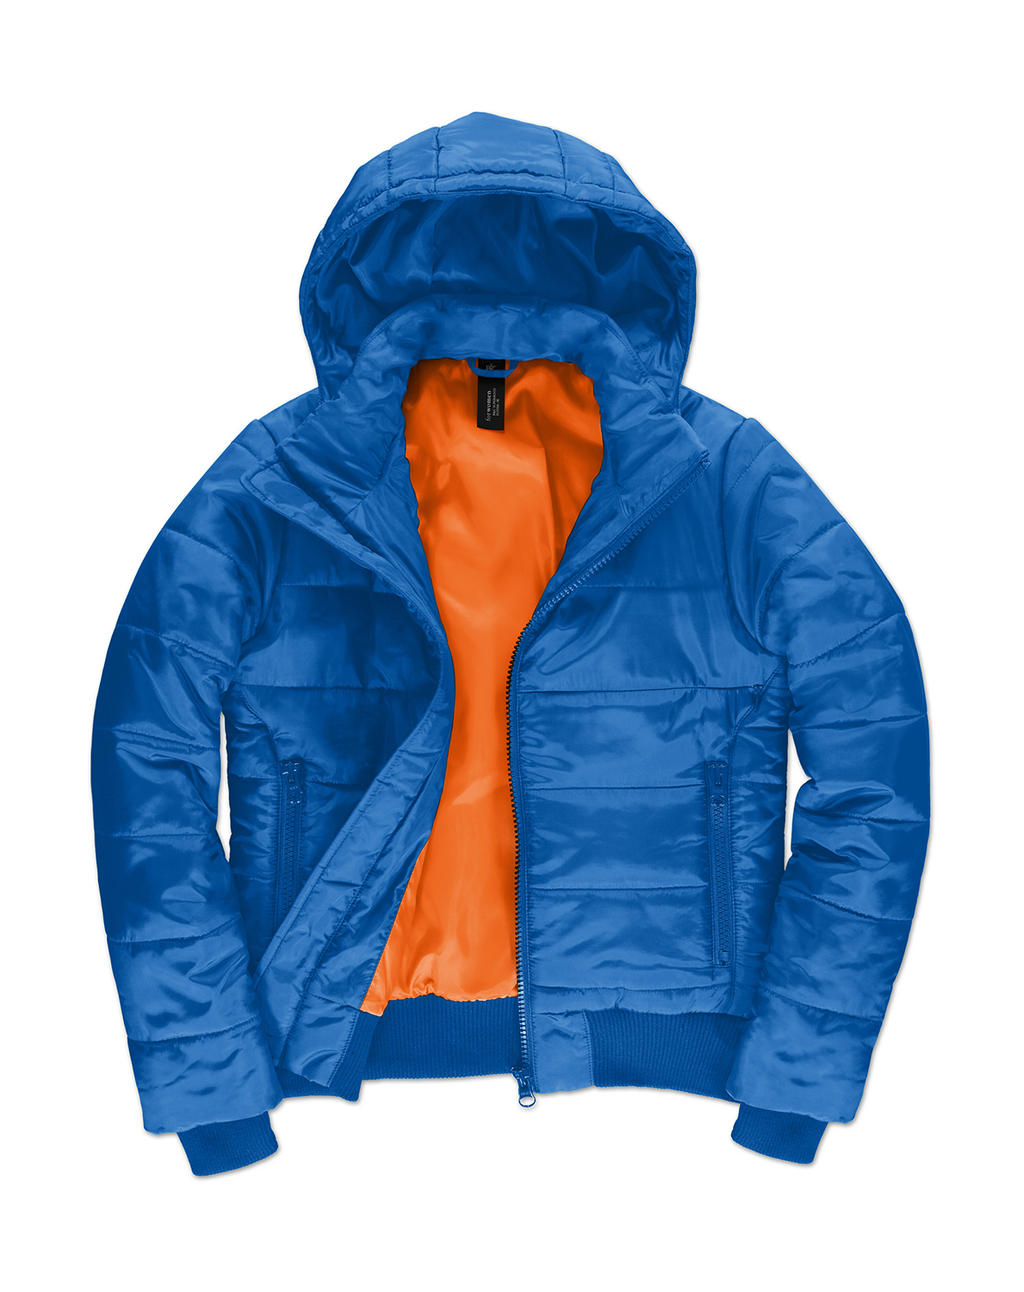  Superhood/women Jacket in Farbe Royal/Neon Orange